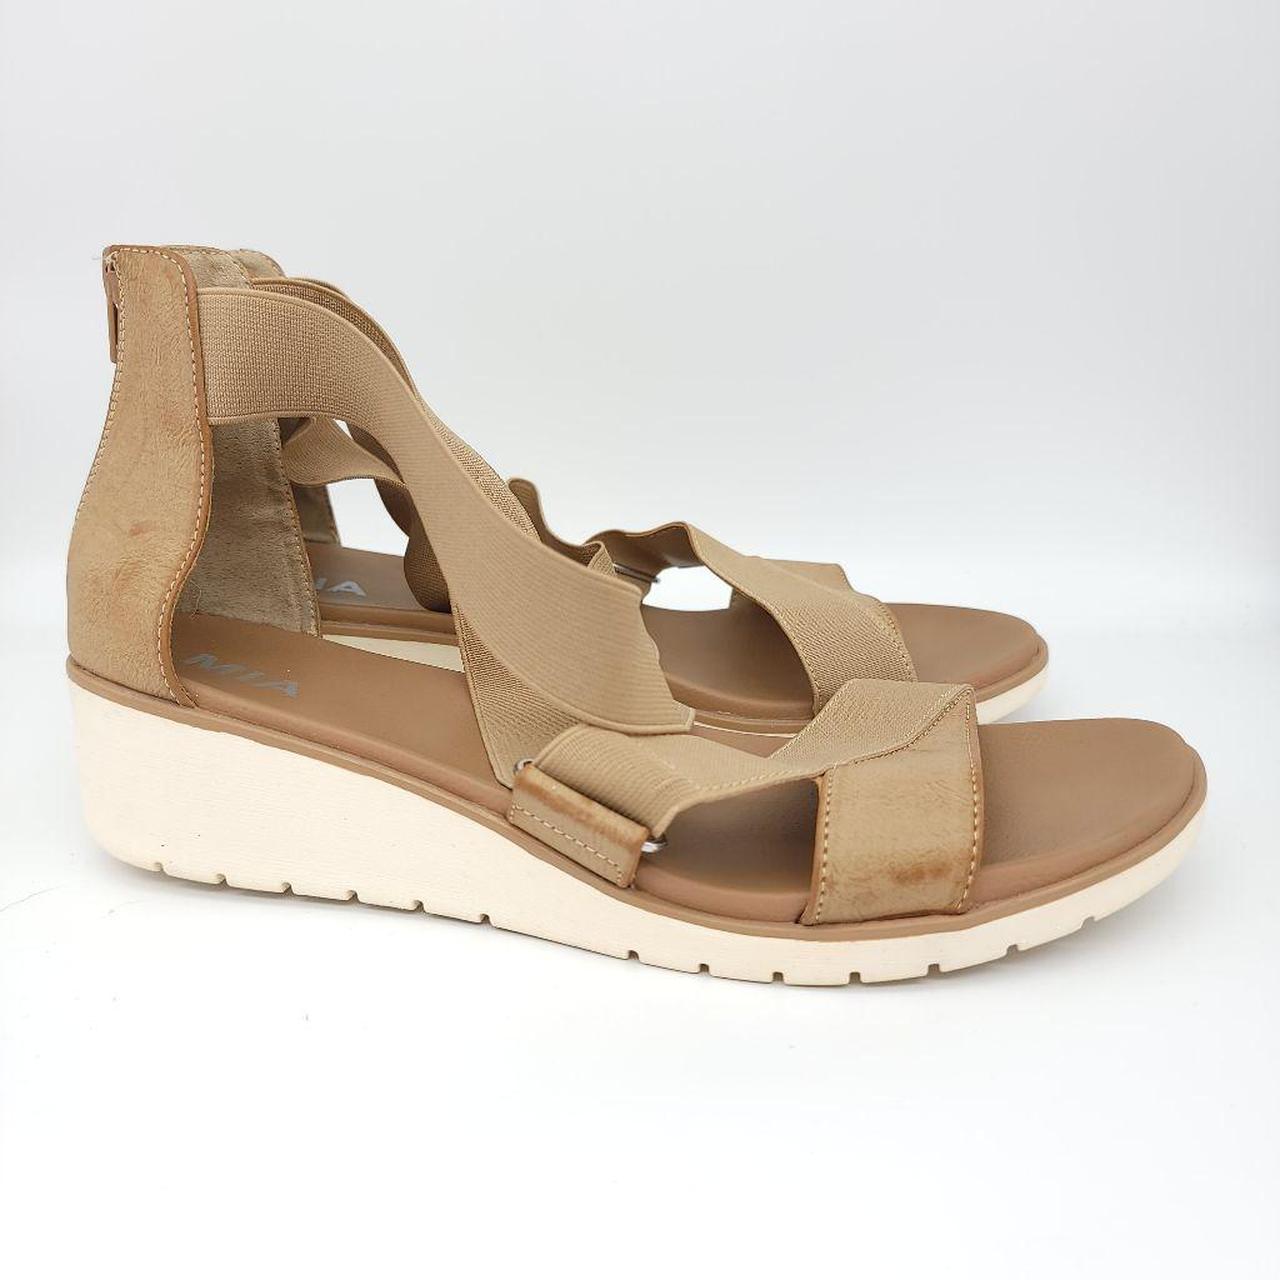 Product Image 4 - Mia Sandals Tan Brown Sandal